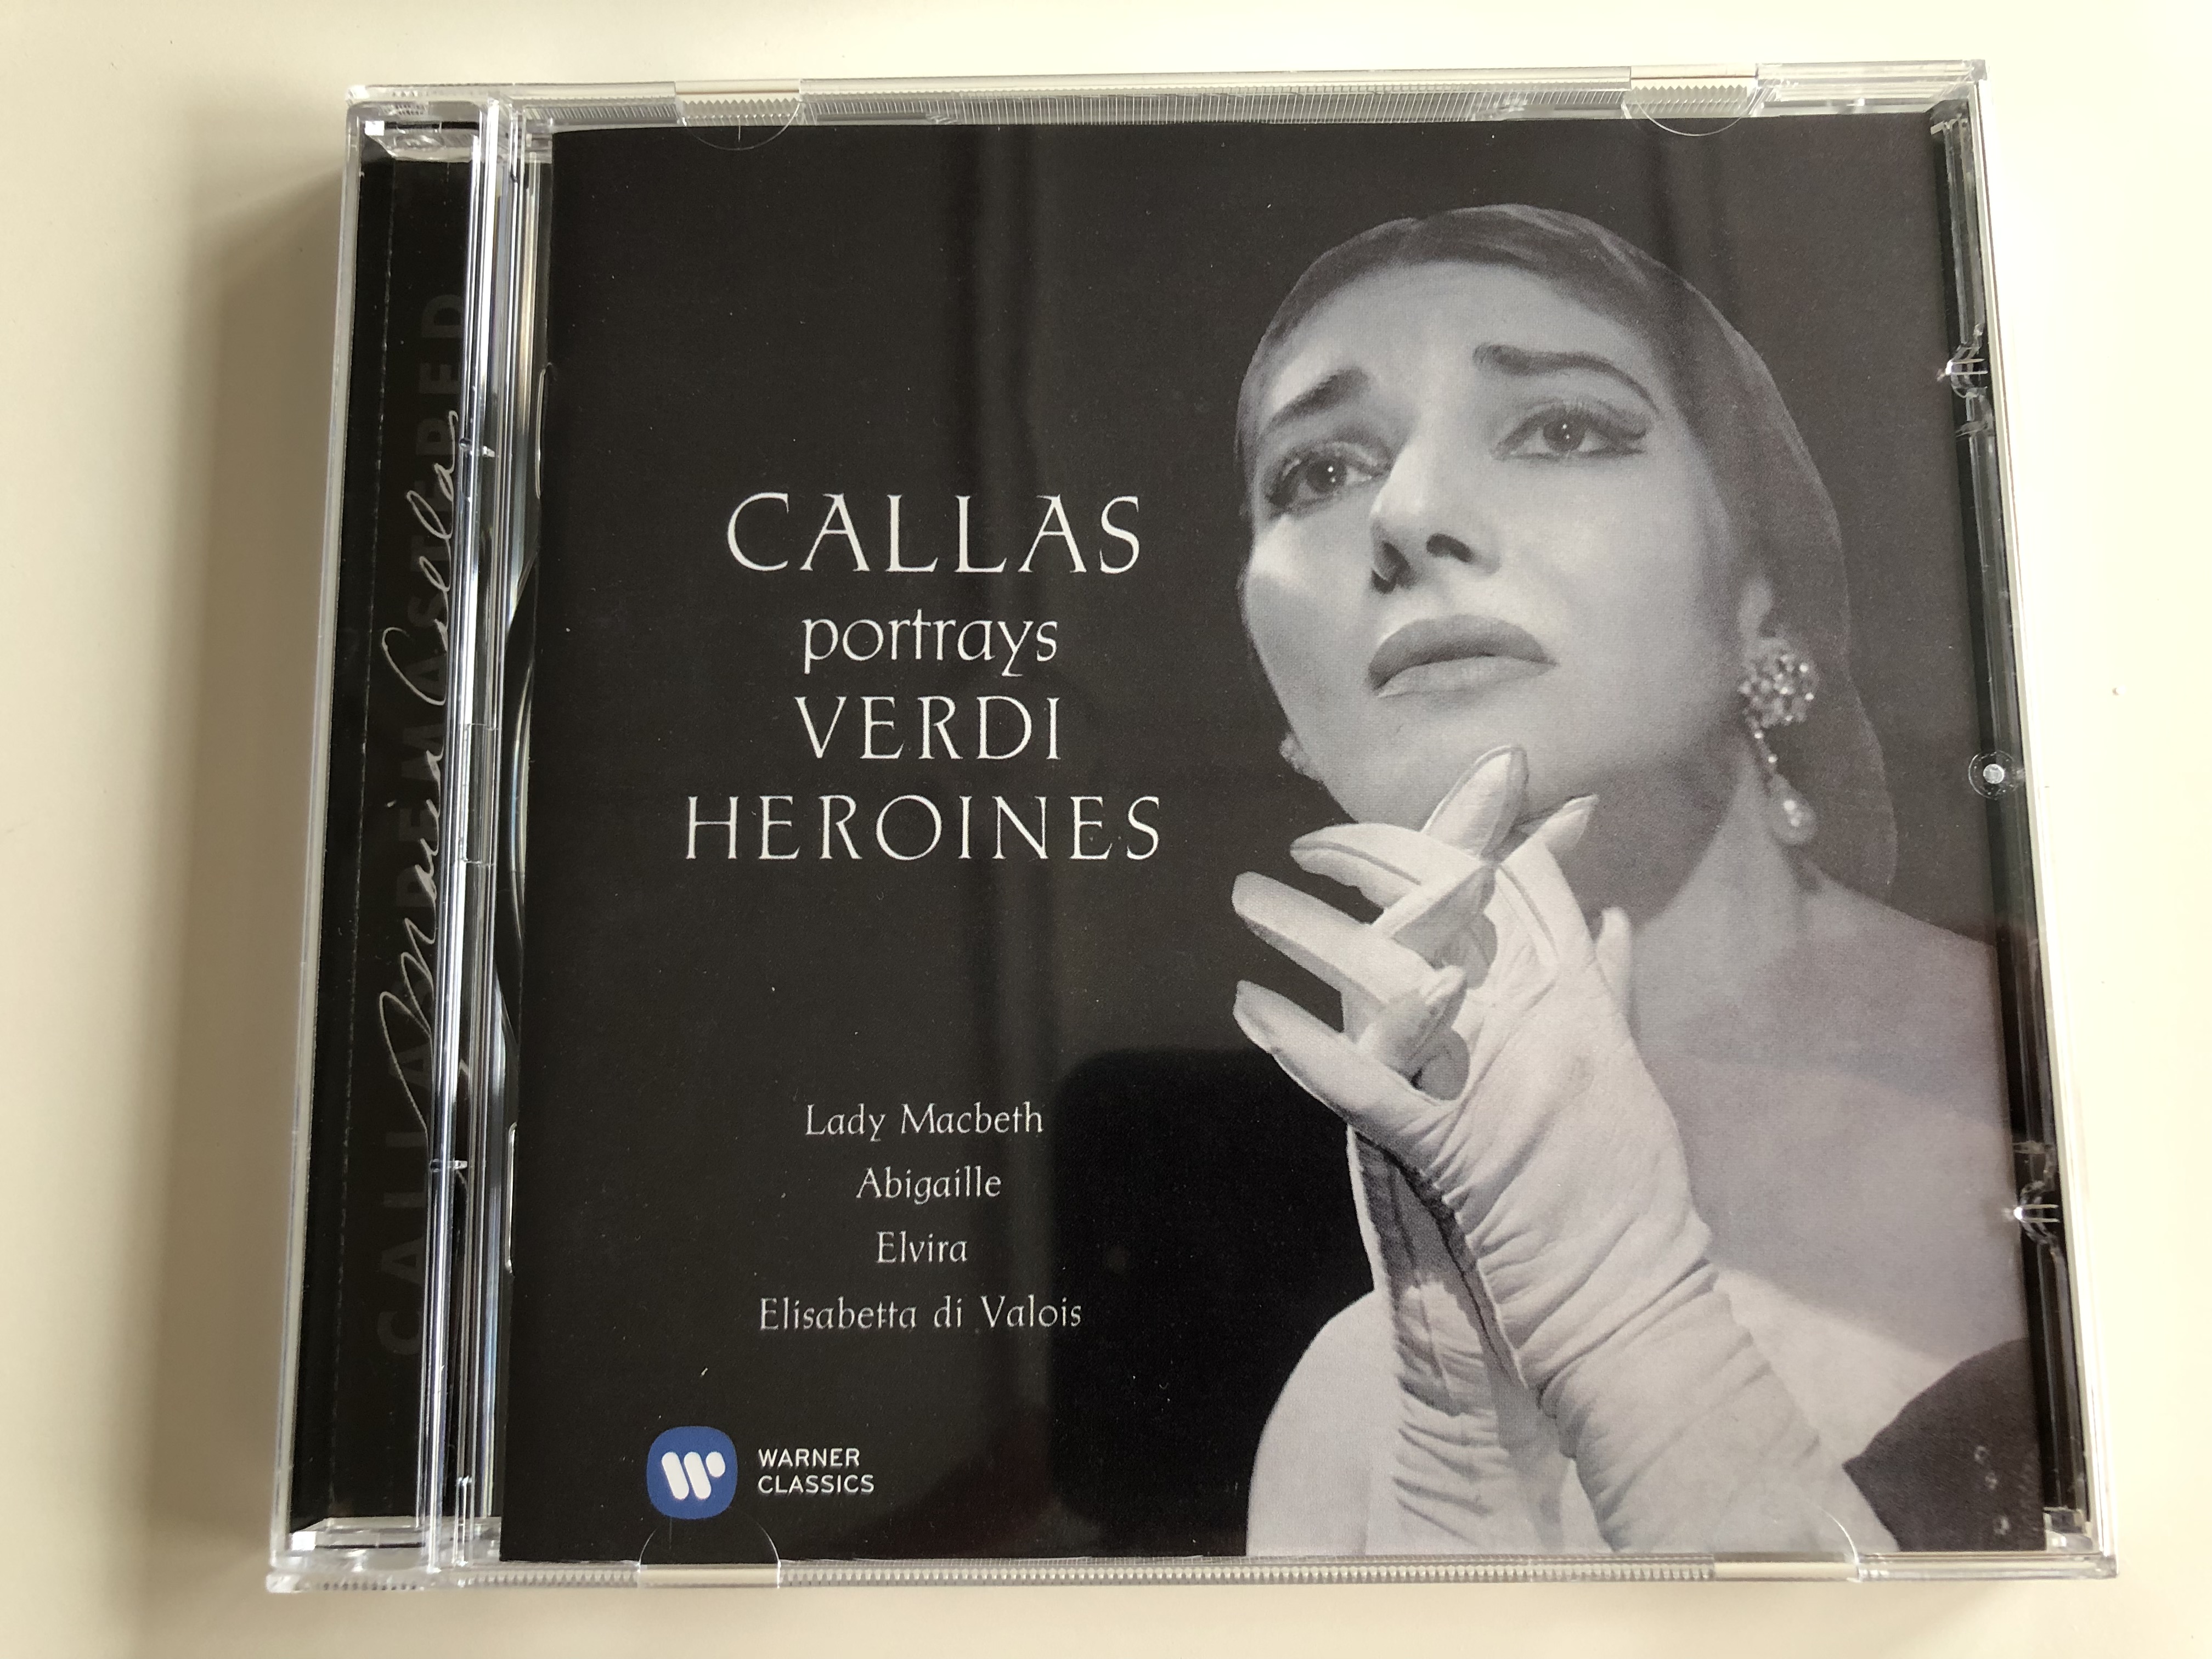 maria-callas-portrays-verdi-heroines-lady-macbeth-abigaille-elvira-elisabetta-di-valois-verdi-arias-i-maria-callas-soprano-philharmonia-orchestra-conducted-by-nicola-rescigno-audio-cd-2012-warner-classics-1-.jpg